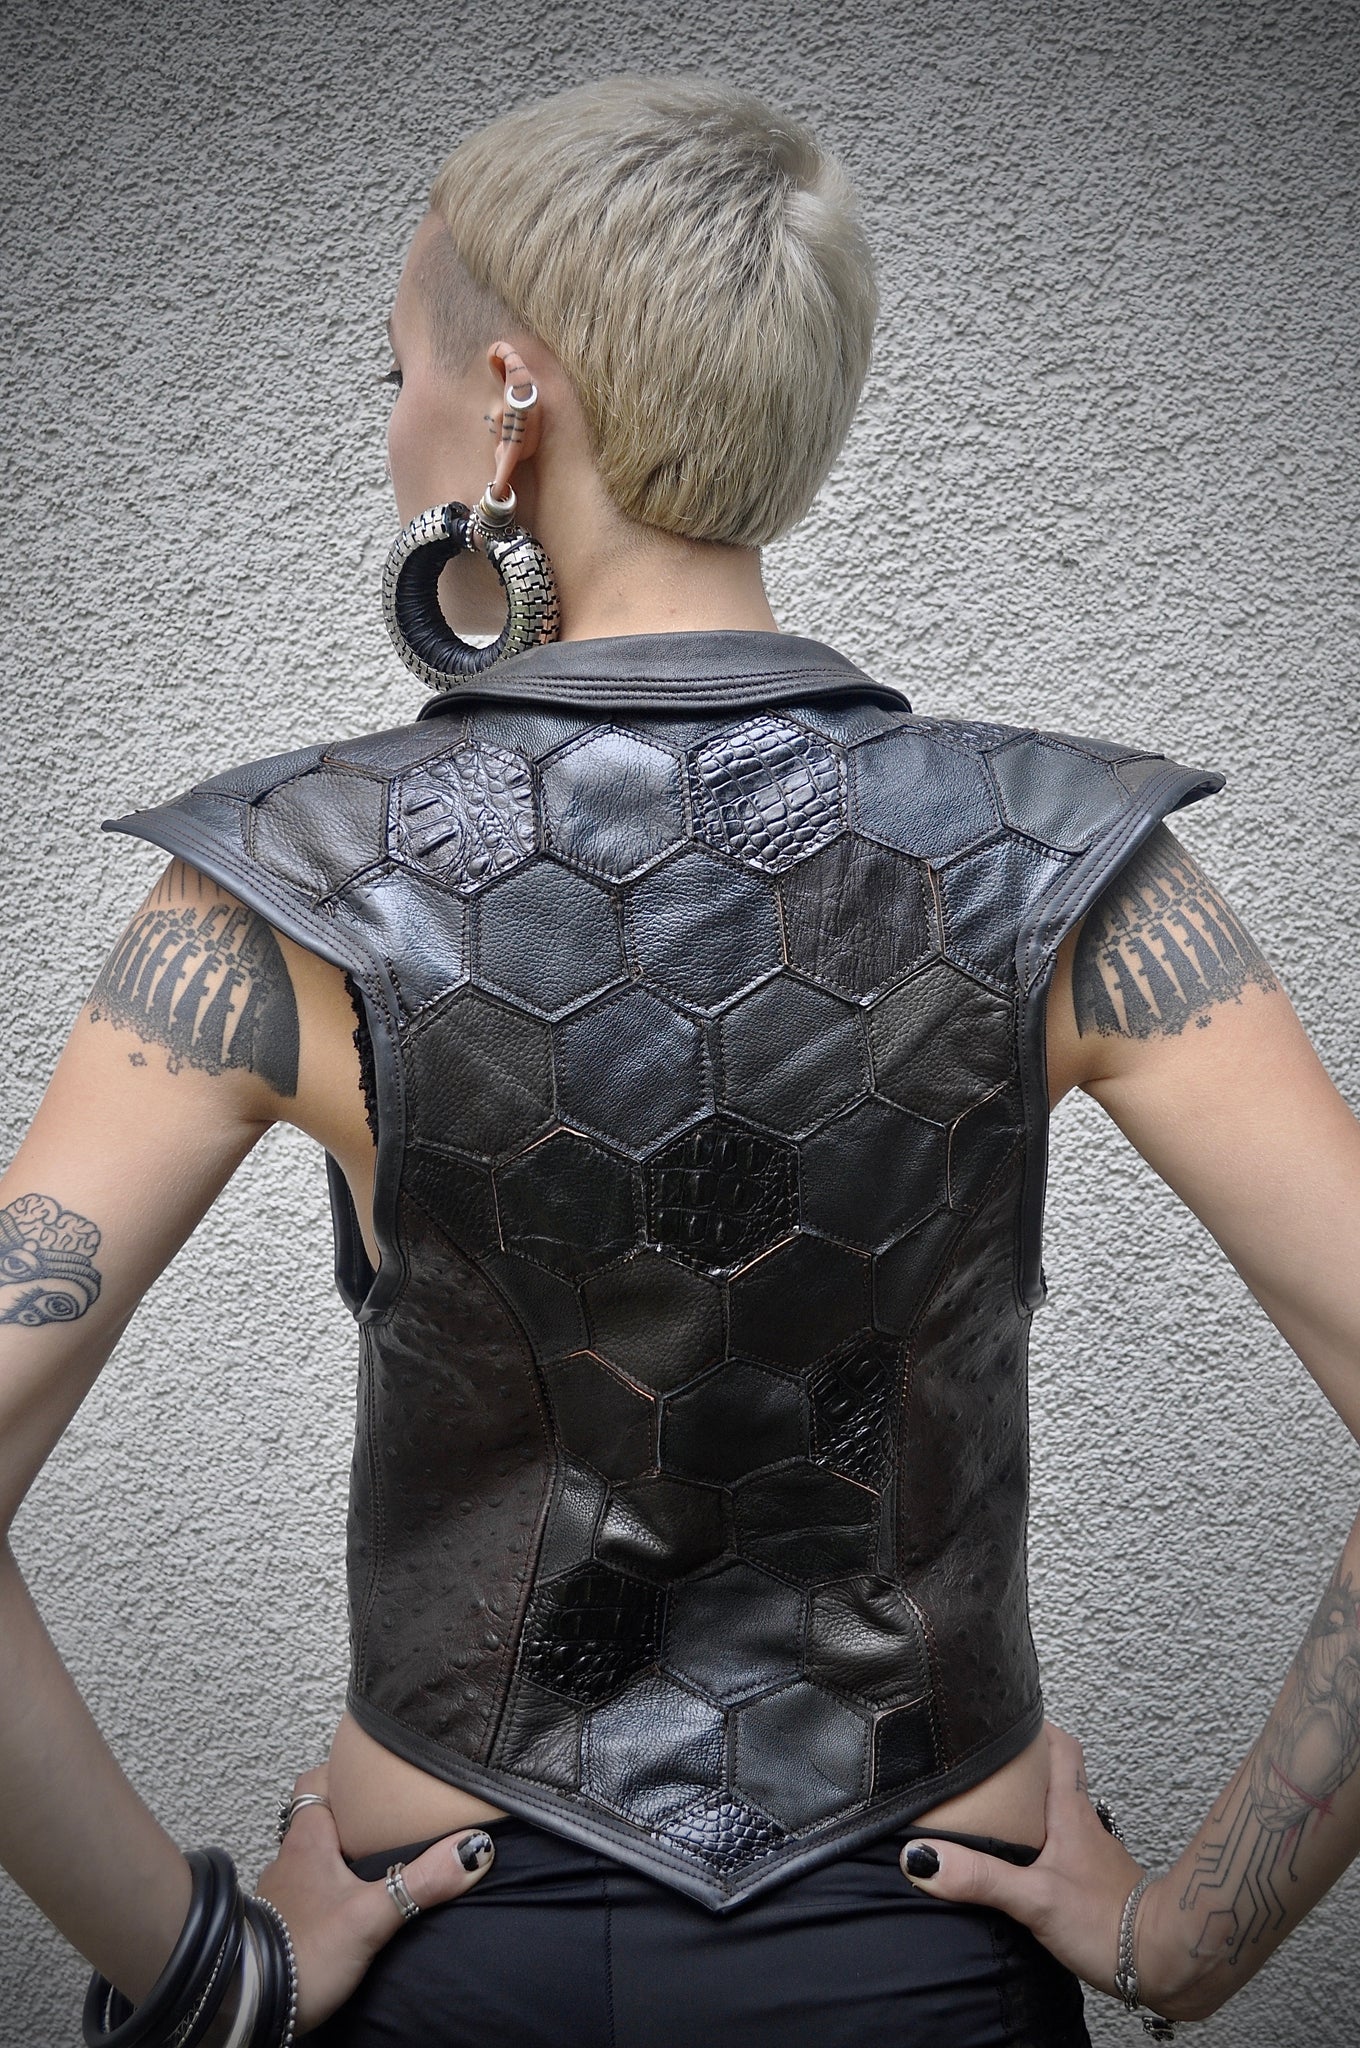 Hexagonal Shades of Black Vest